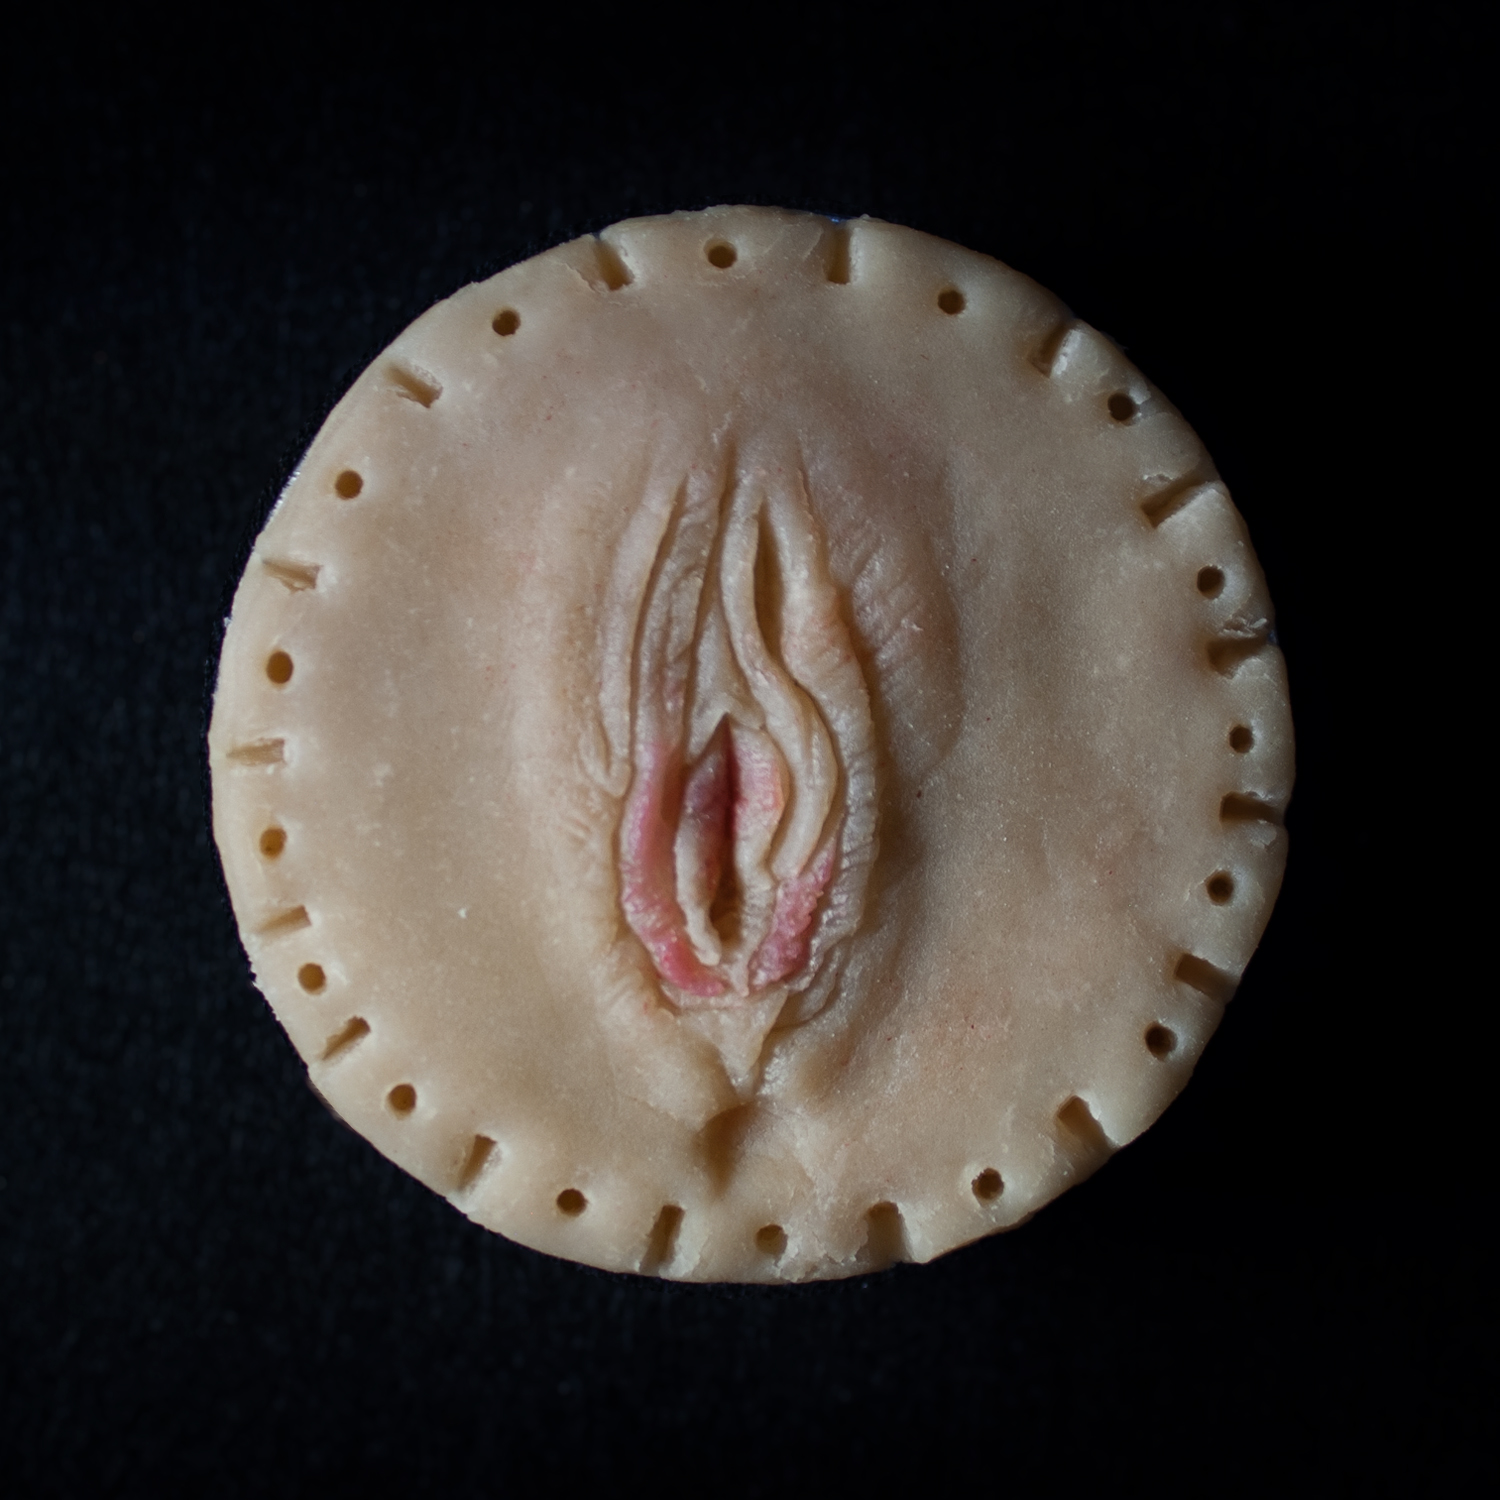 A 4 inch mini pie with a pie crust design that looks like a realistic vulva